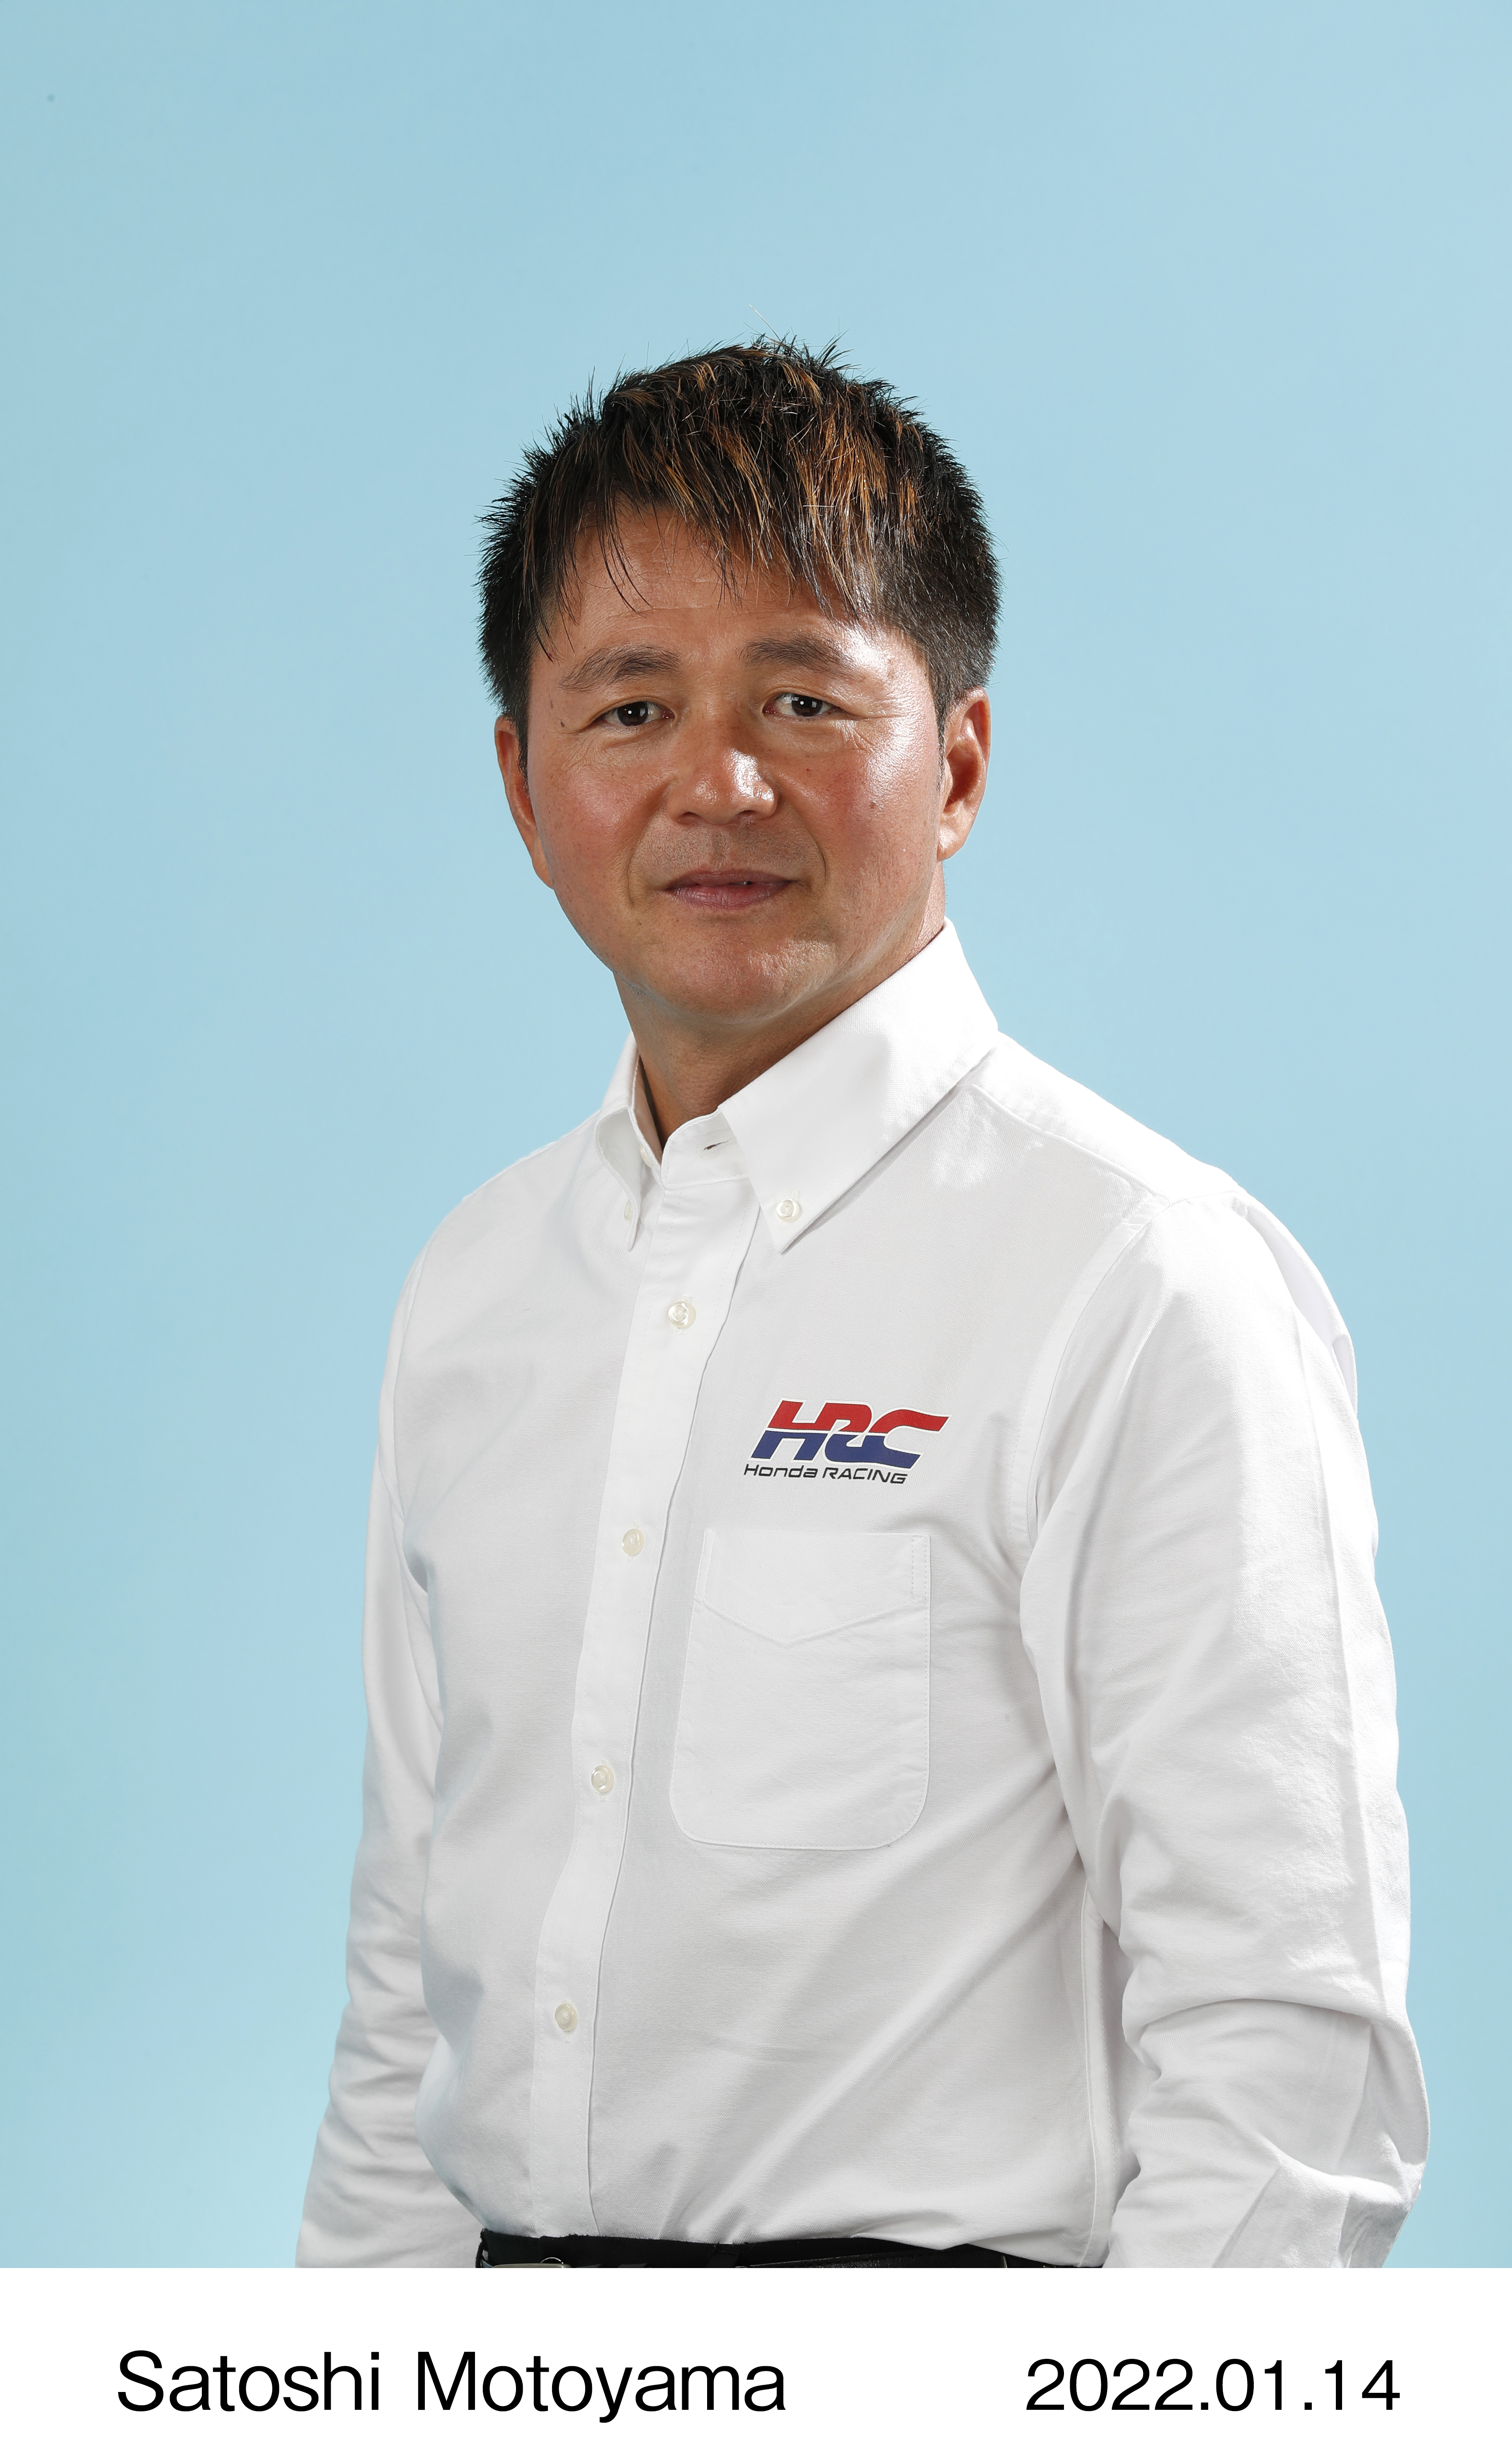 Satoshi Motoyama